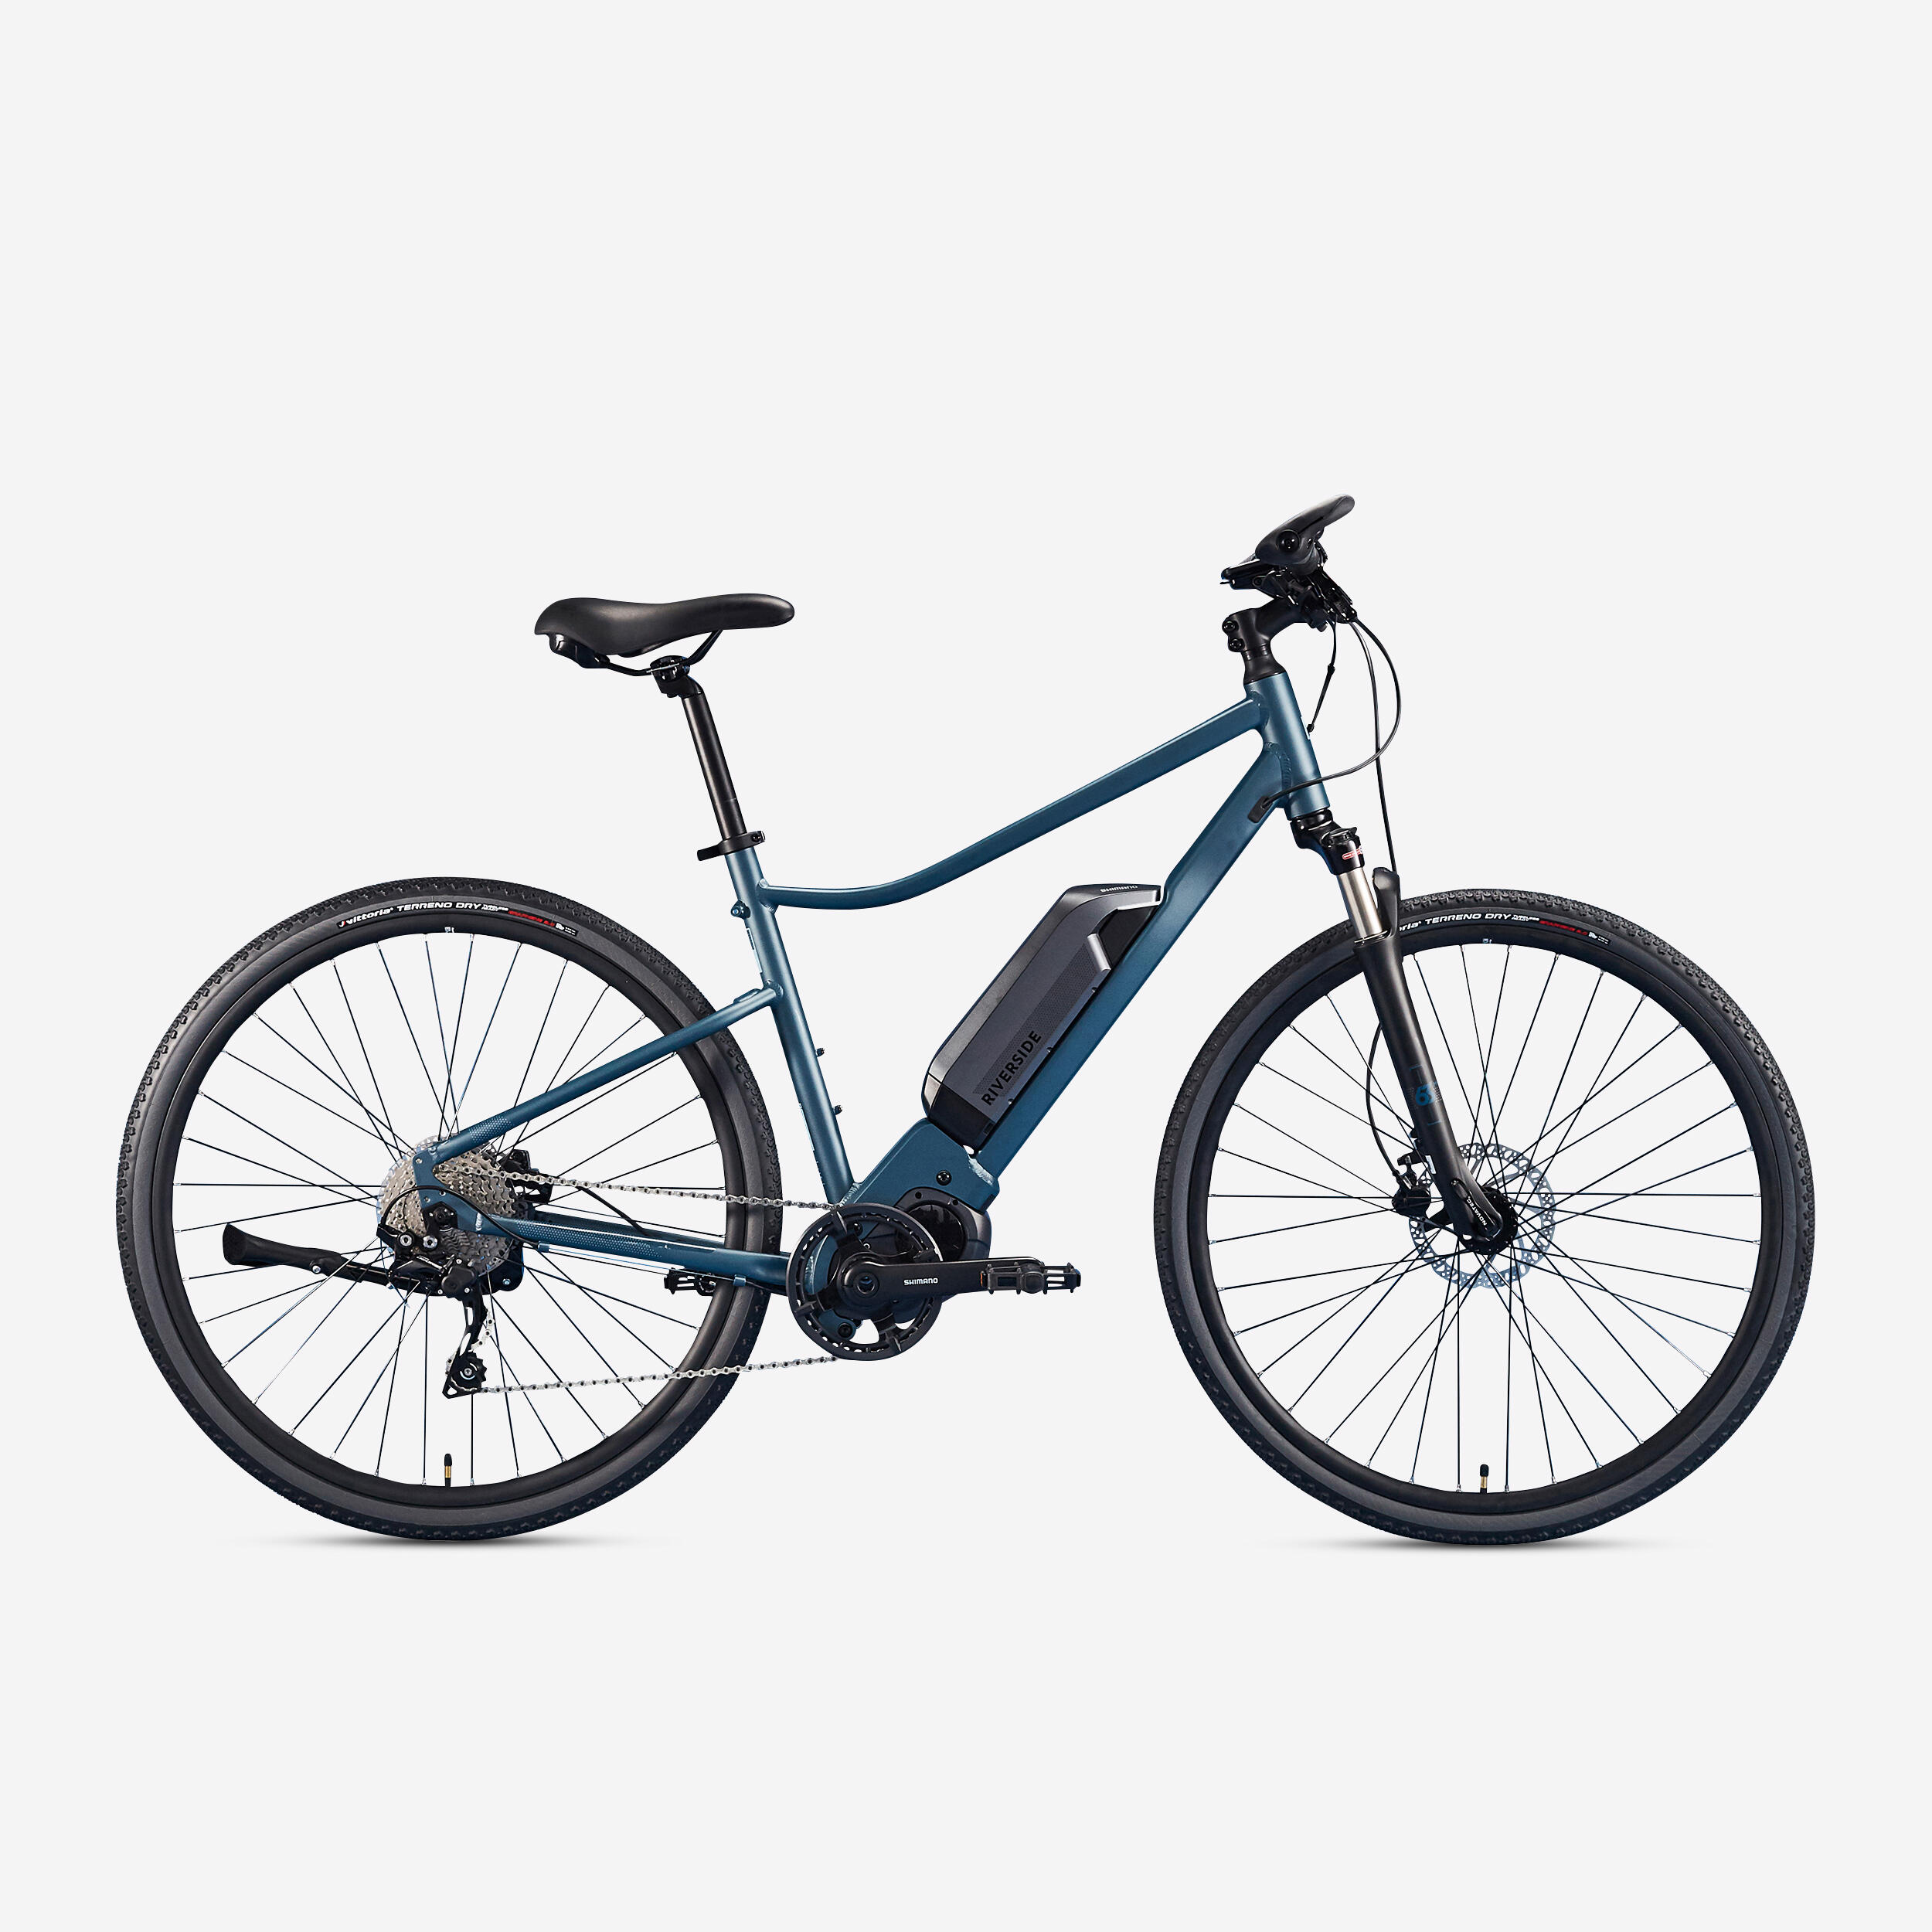 Shimano 60 Nm motor, long-distance electric hybrid bike, blue 1/90